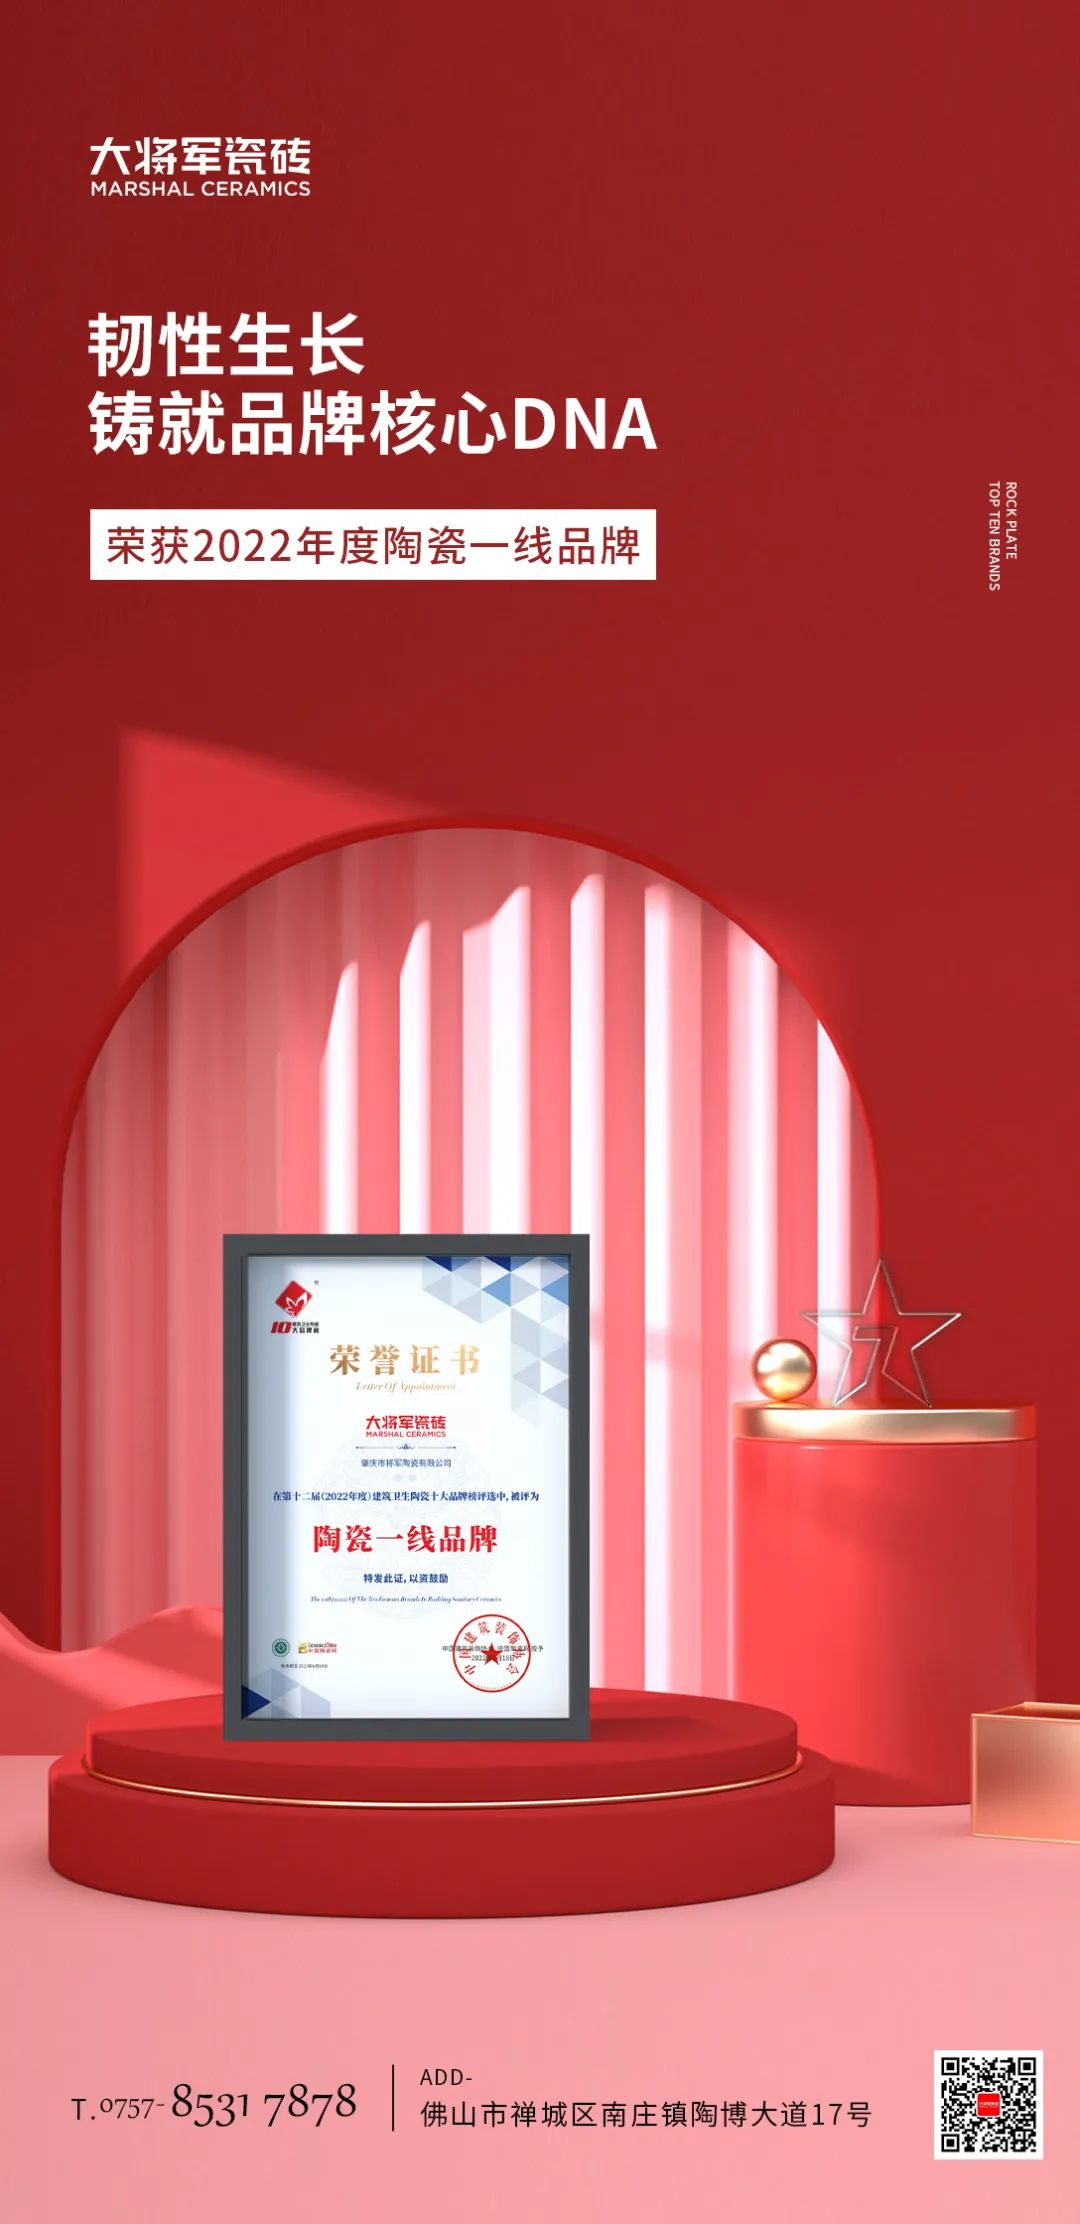 bob体育官方app下载
十大品牌大将军｜捷报频传，再获殊荣，迈入一线阵营